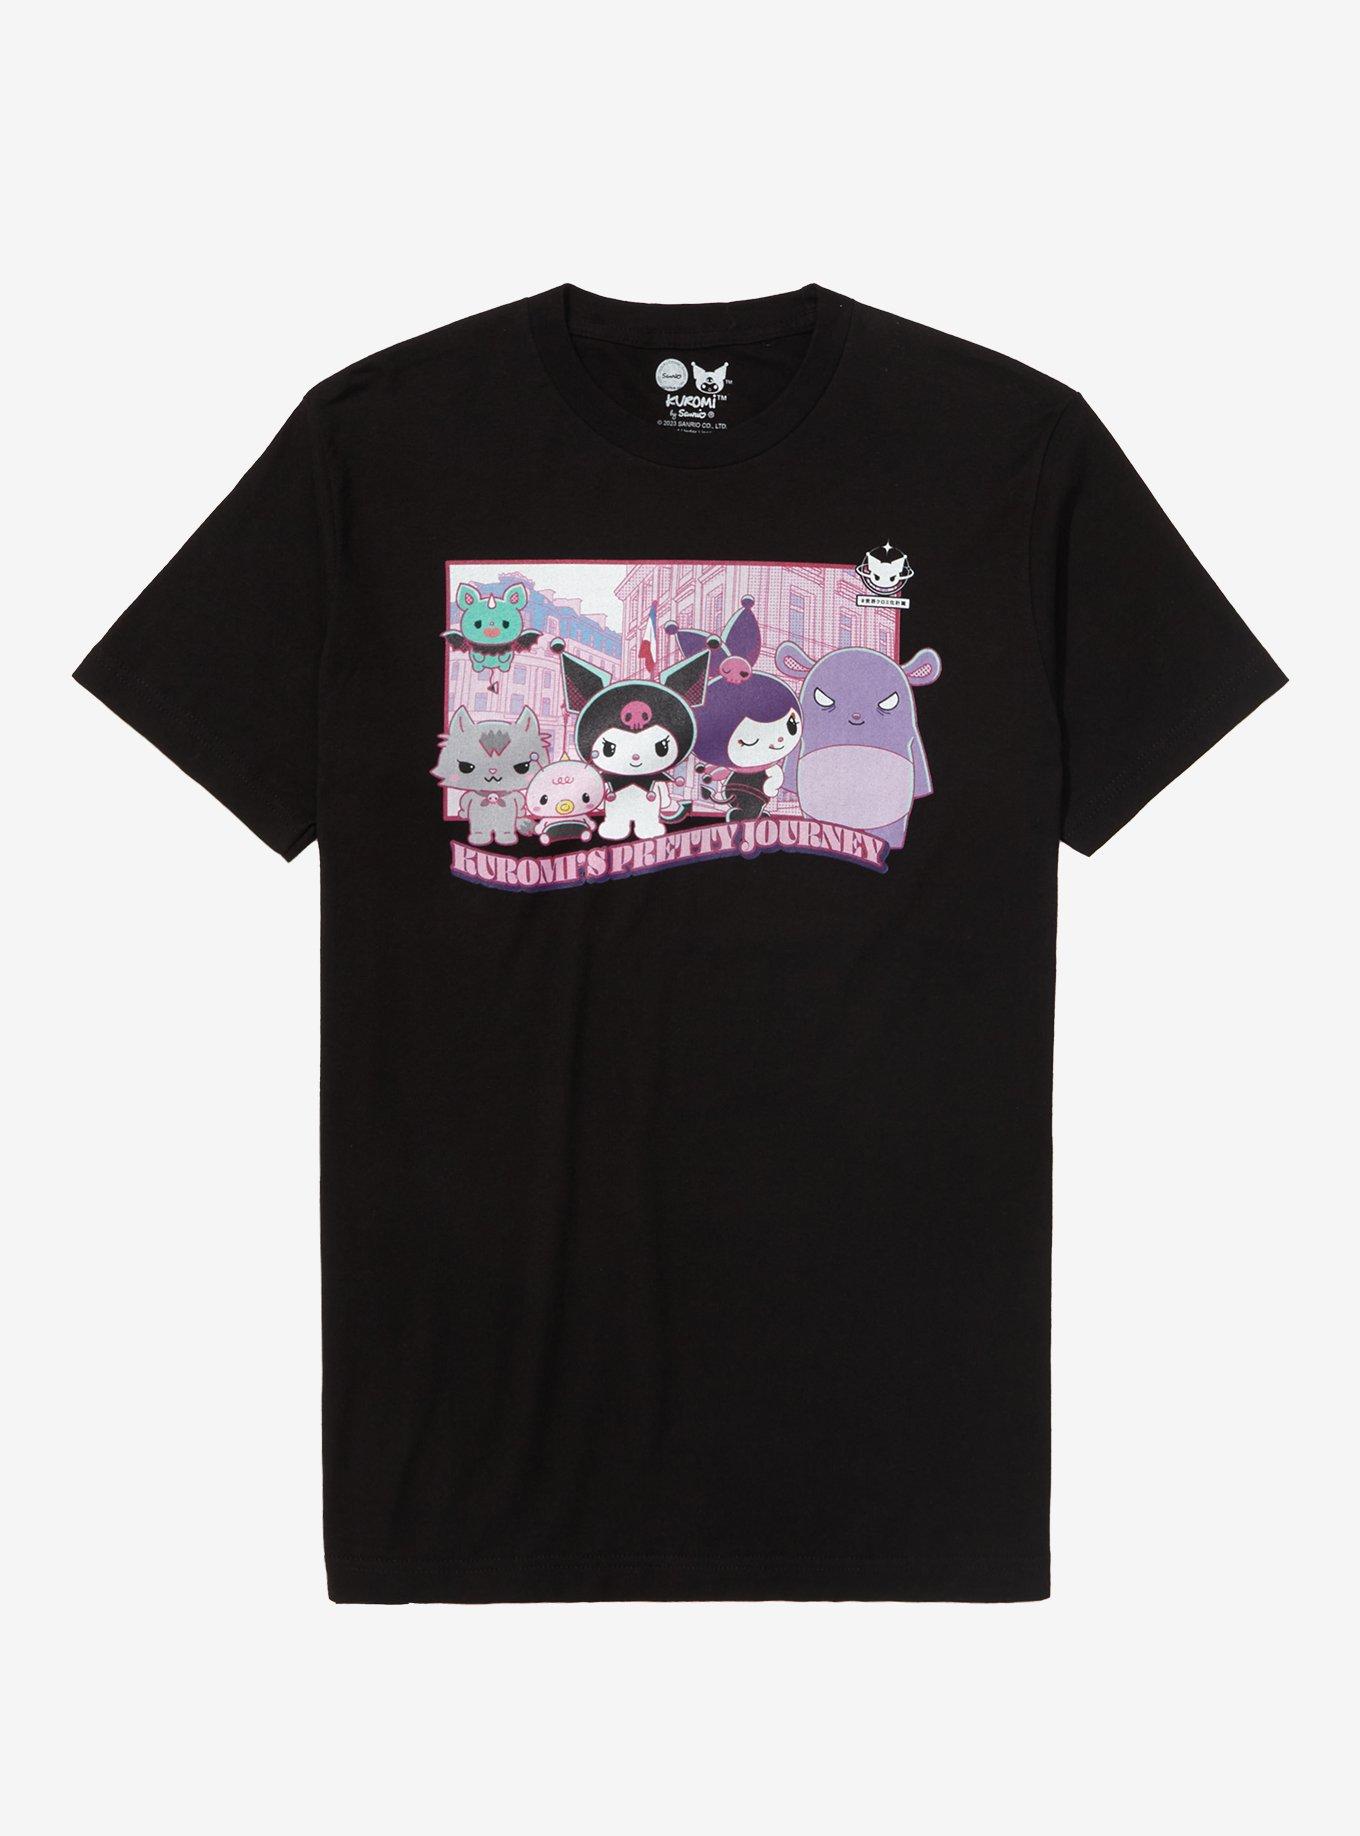 Sanrio Kuromi Anime Hearts & Skulls Unisex Black Graphic Tee Shirt-L